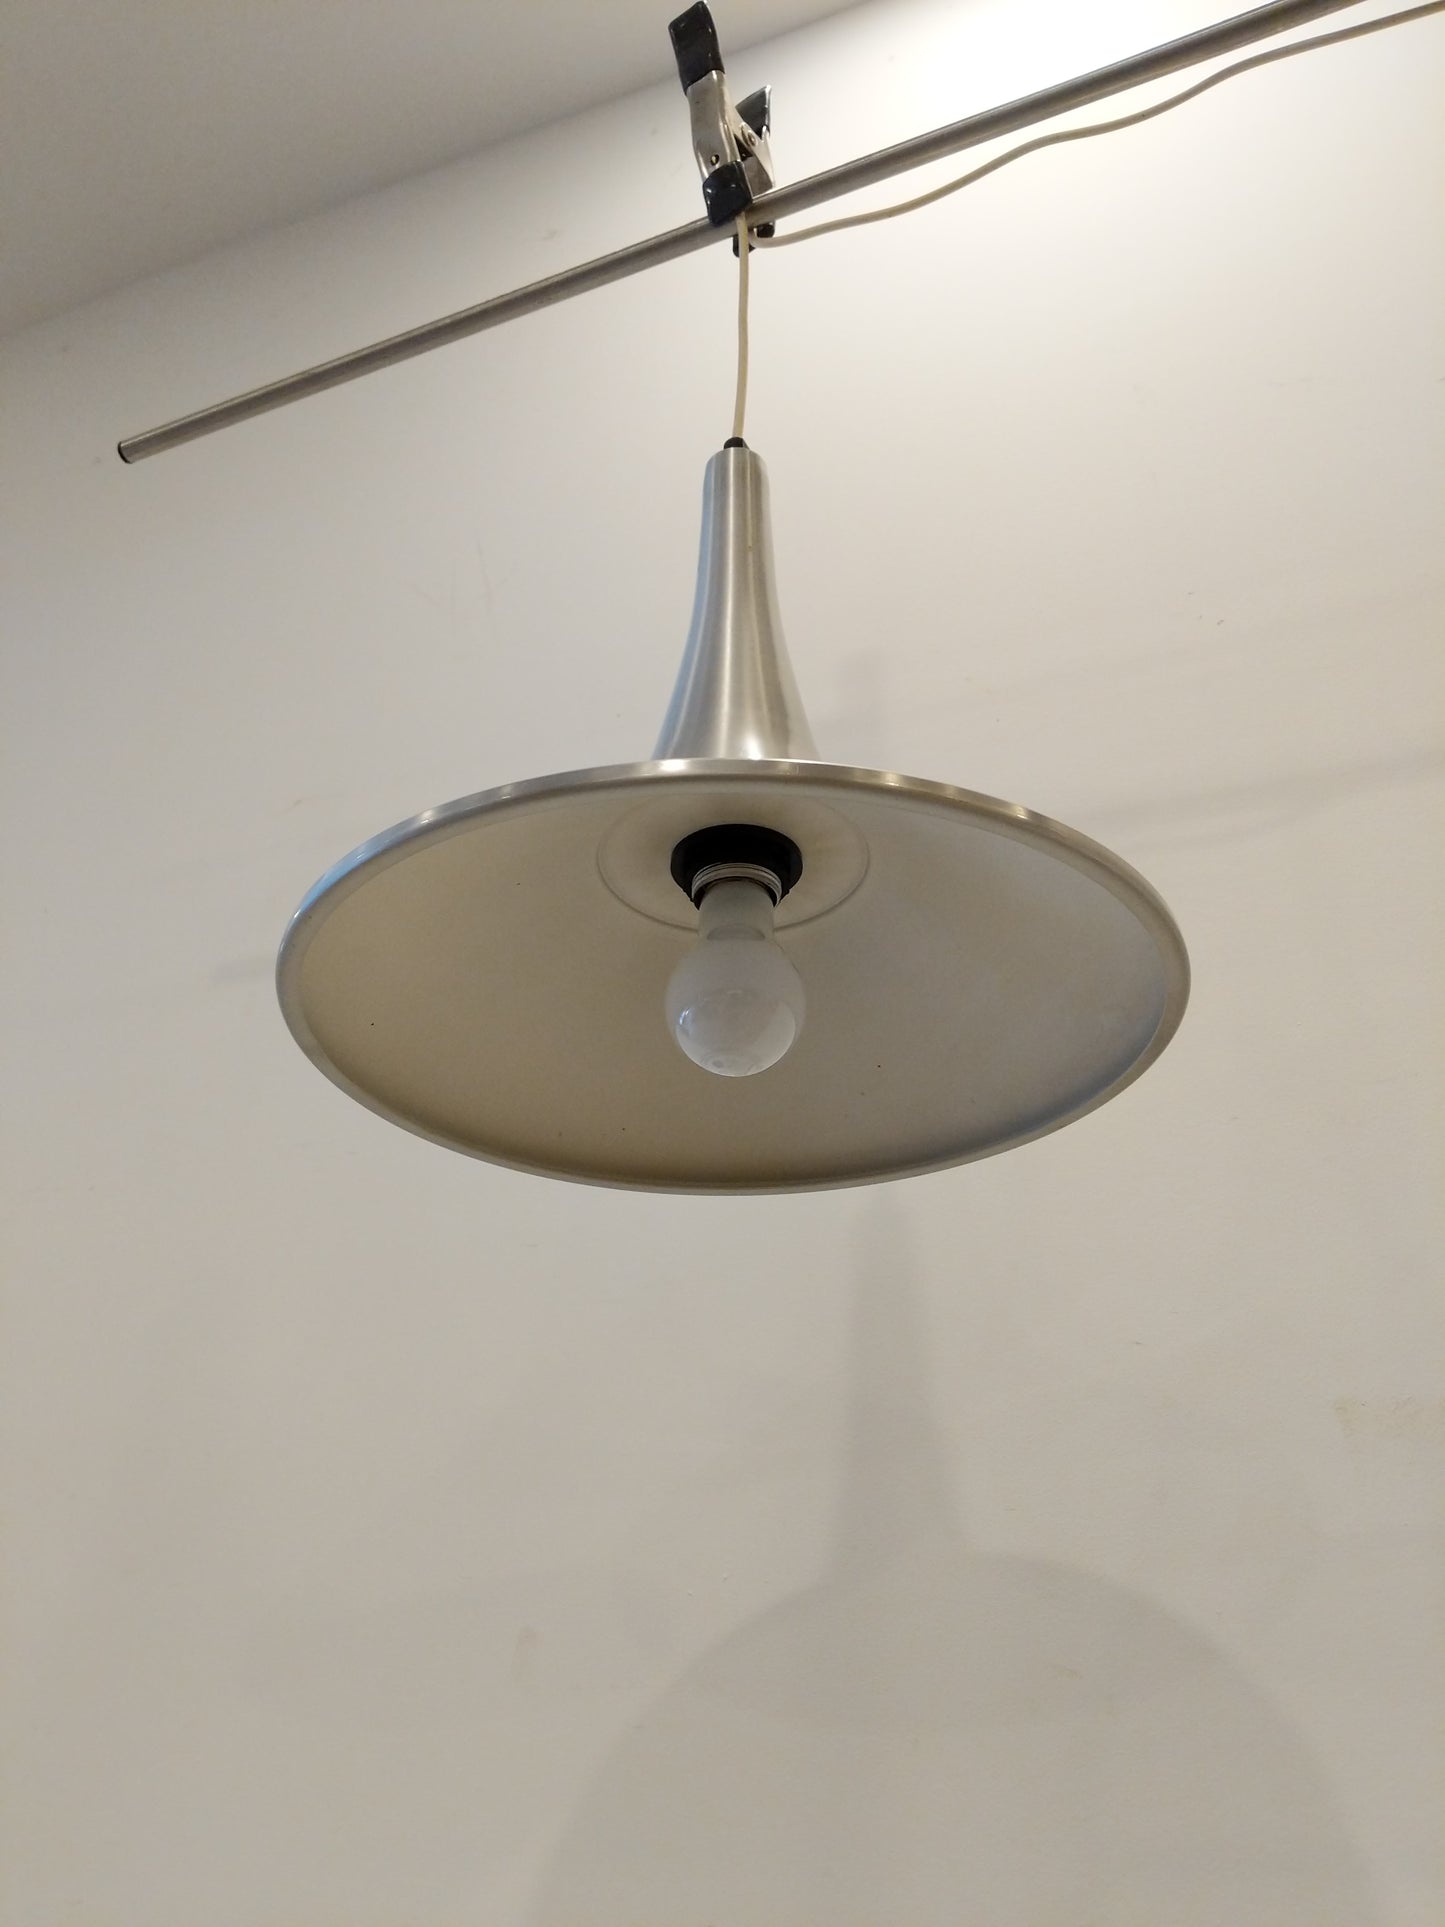 Vintage Danish Modern Lamp